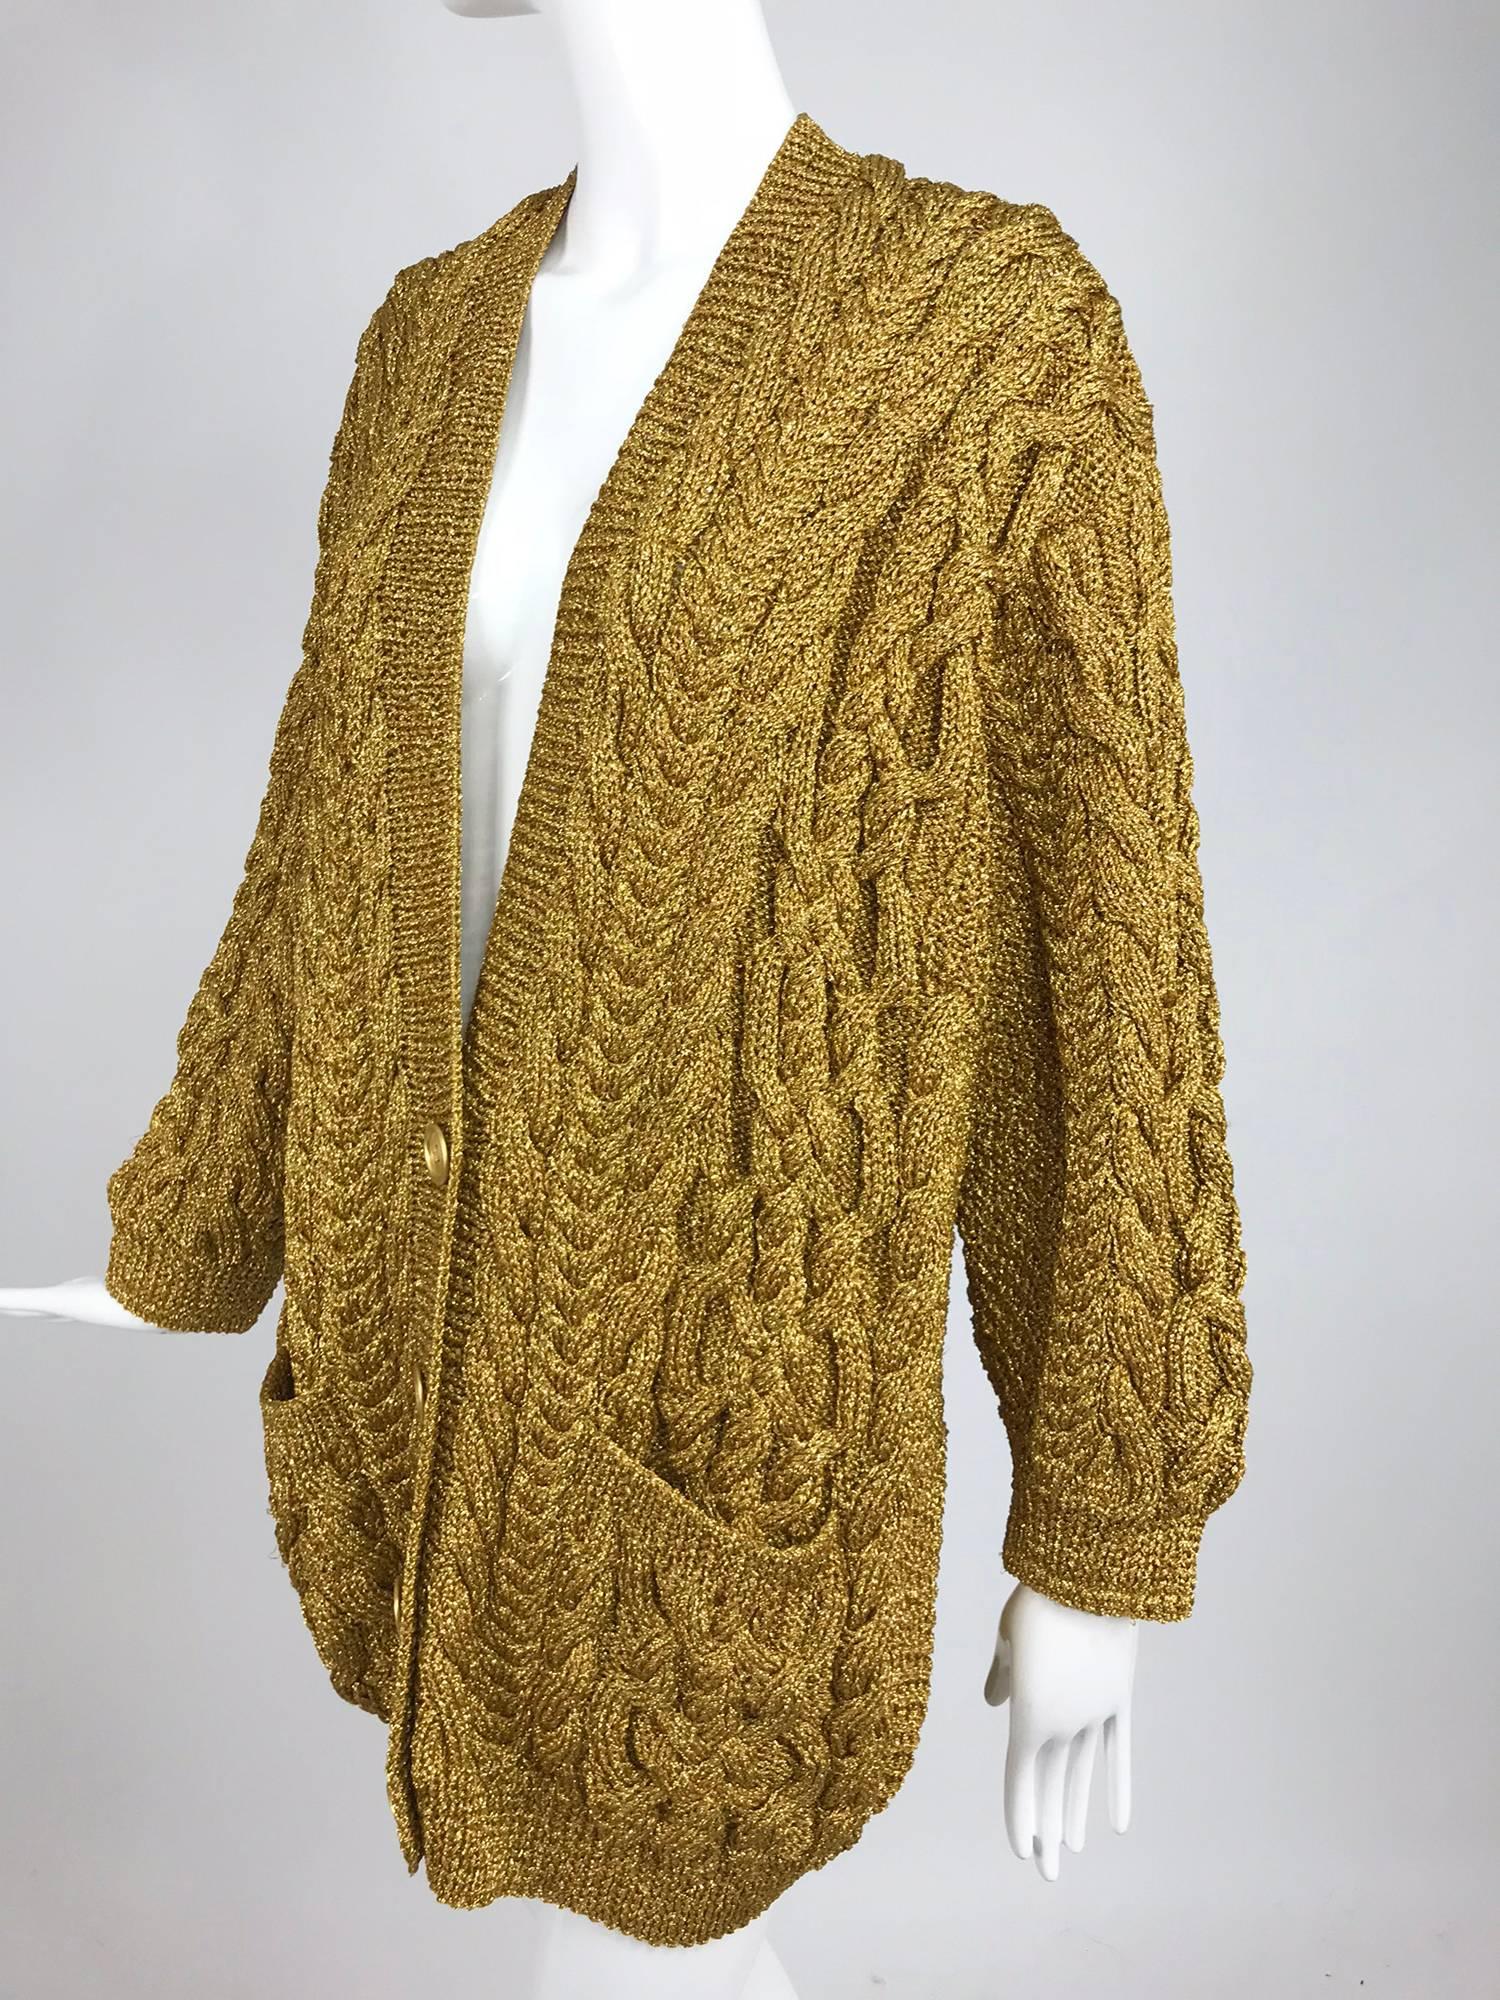 Anne Klein chunky gold metallic knit cardigan sweater 1990s 4